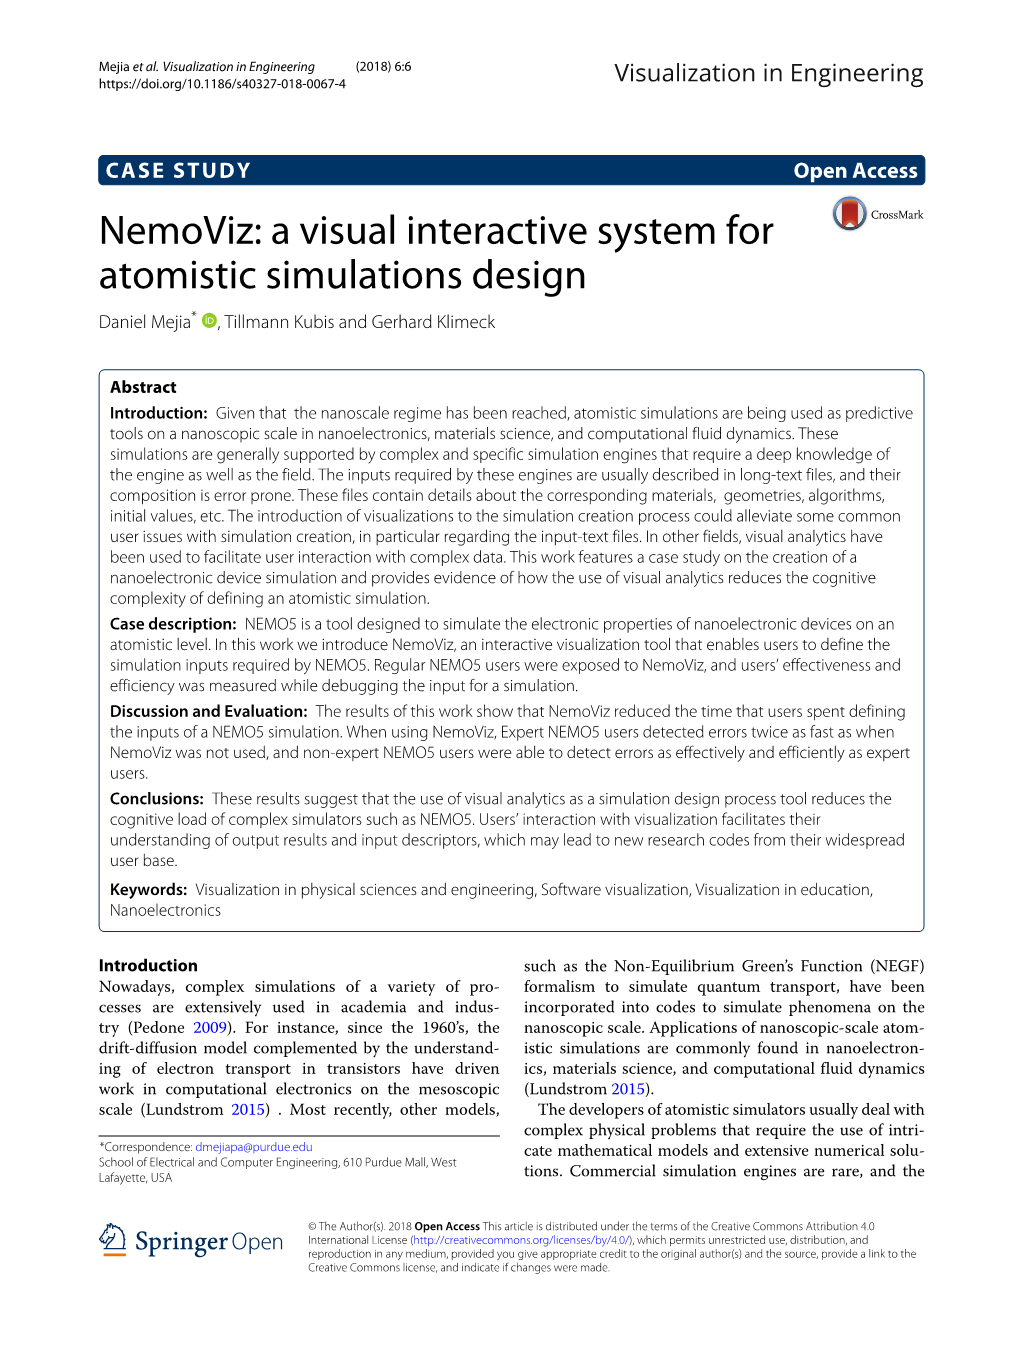 Nemoviz: a Visual Interactive System for Atomistic Simulations Design Daniel Mejia* , Tillmann Kubis and Gerhard Klimeck